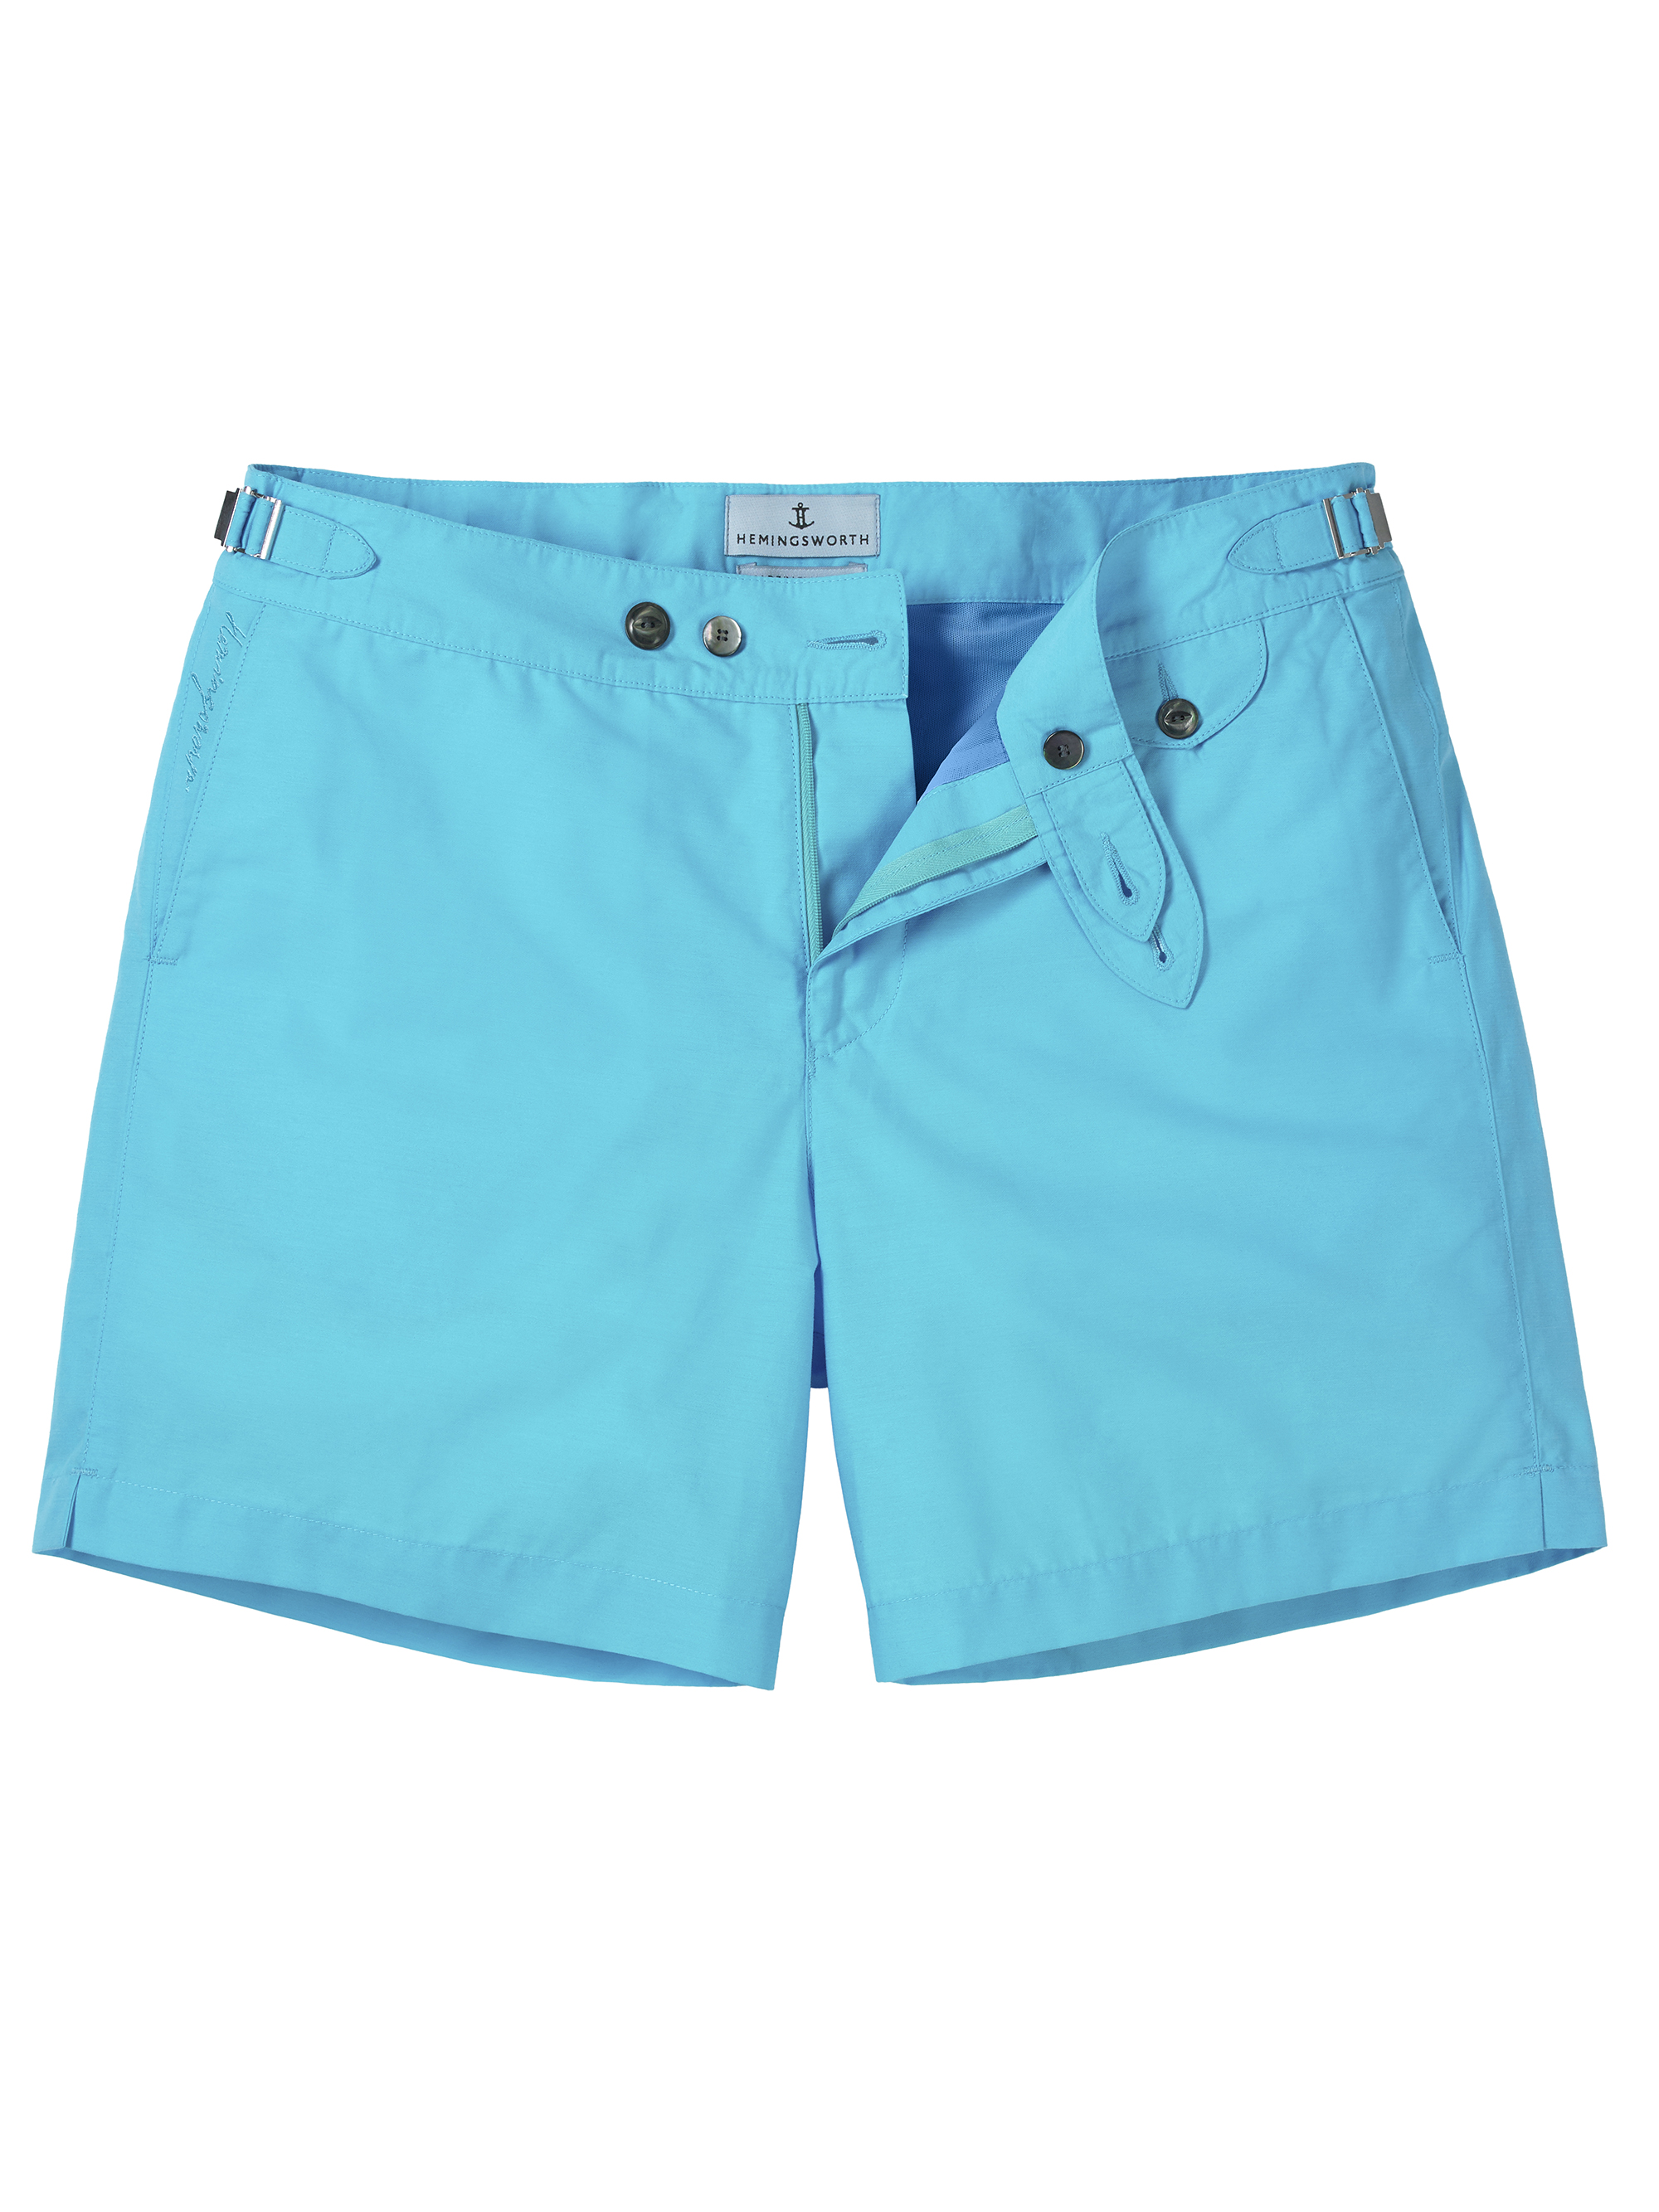 Hemingsworth | Blue Swim Shorts | Made in England